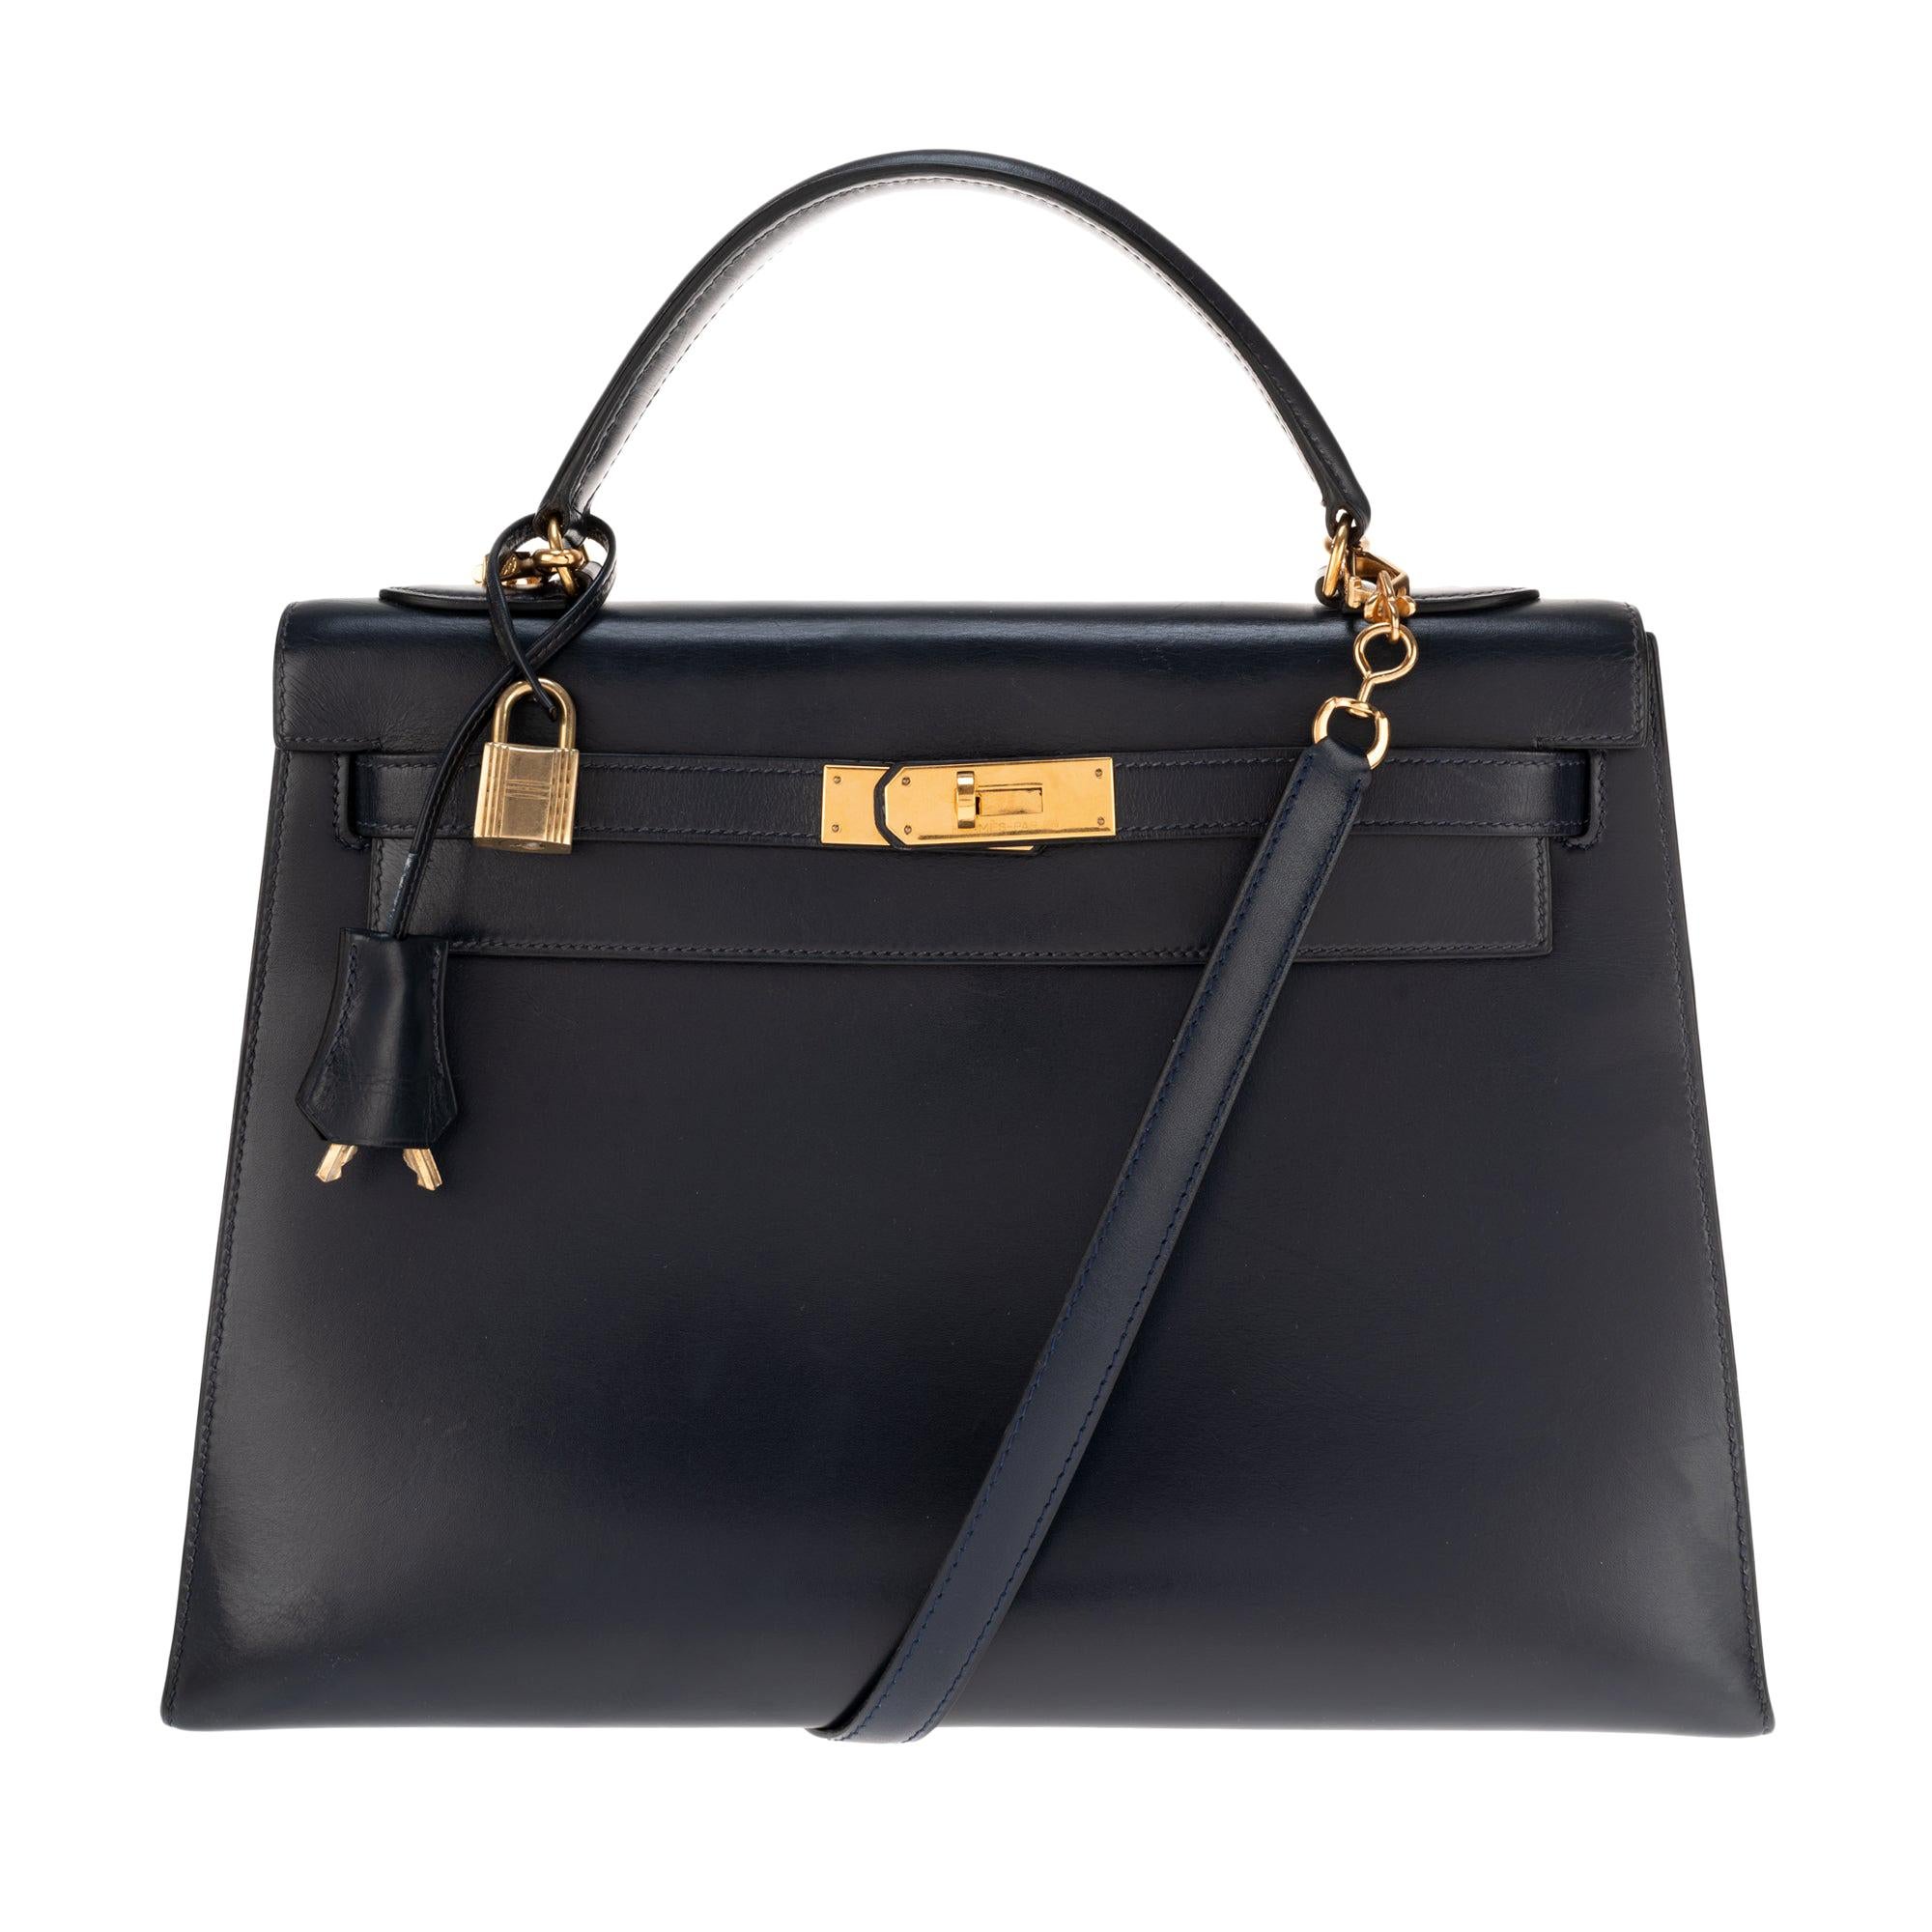 Handbag Hermès Kelly sellier 32 in calfskin blue navy with strap, gold hardware!